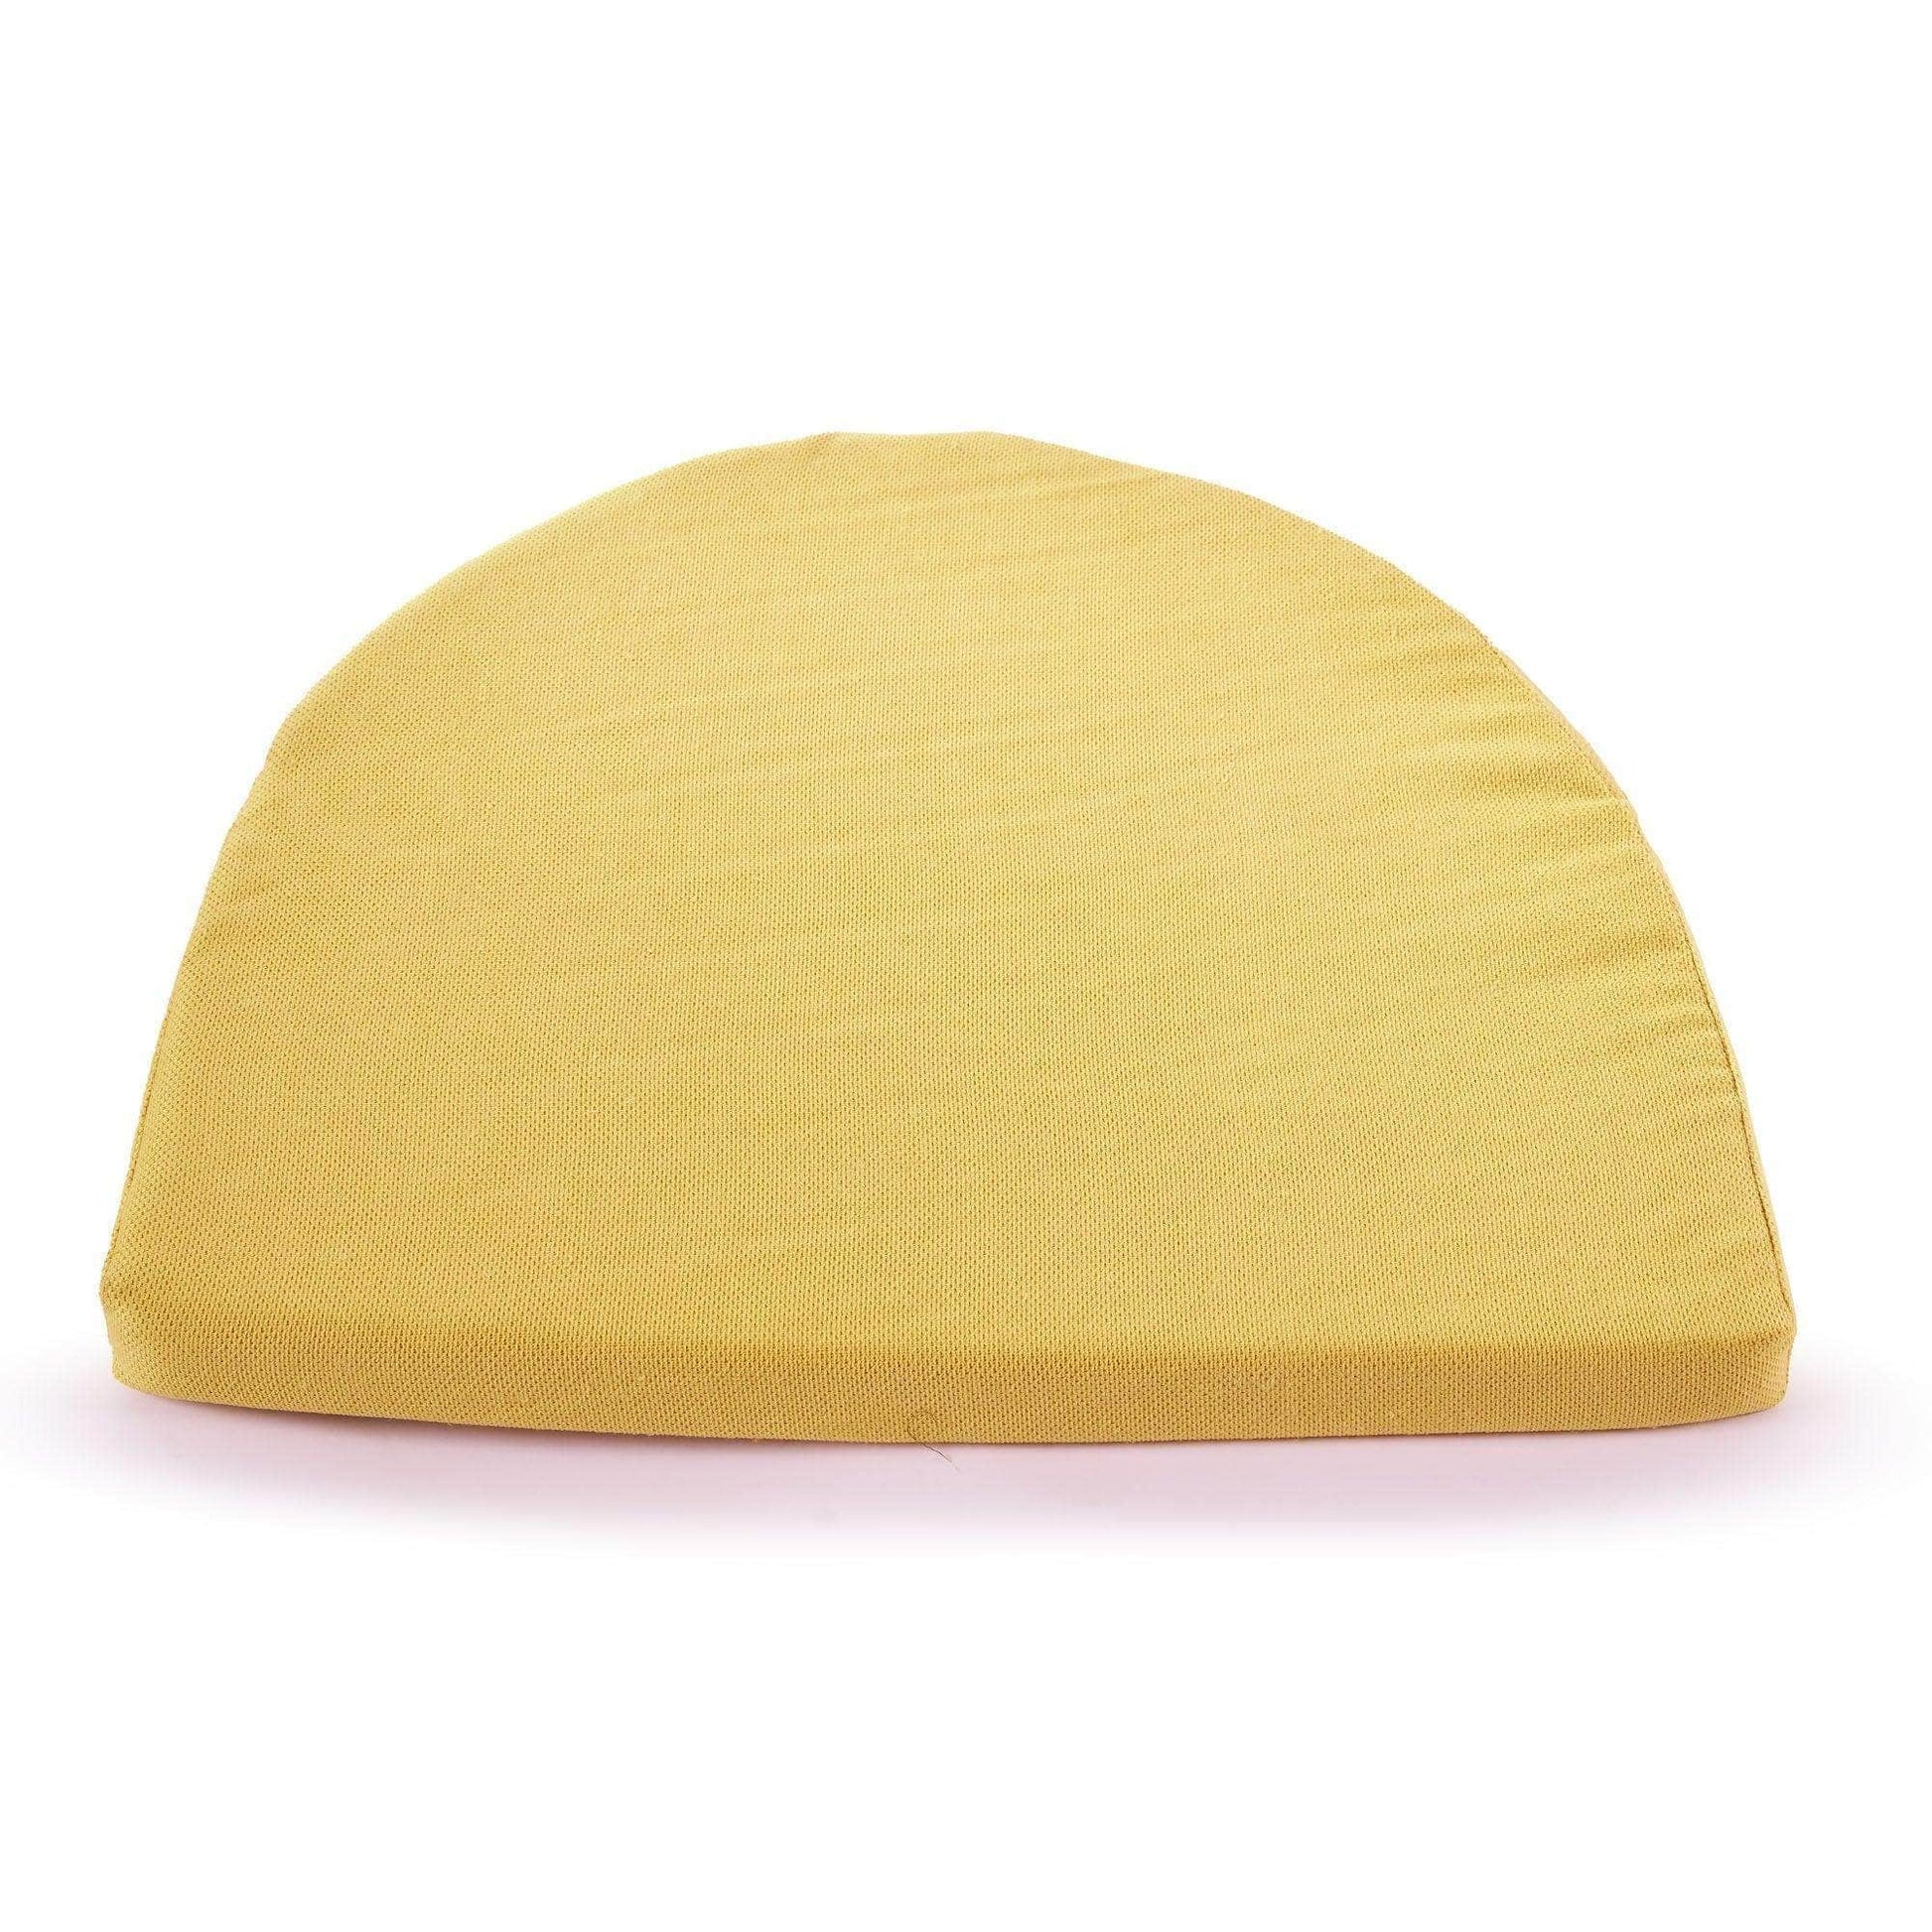 Penguin Group Cushions Yellow Half-Circle Sponge Cushion 44×50×4cm